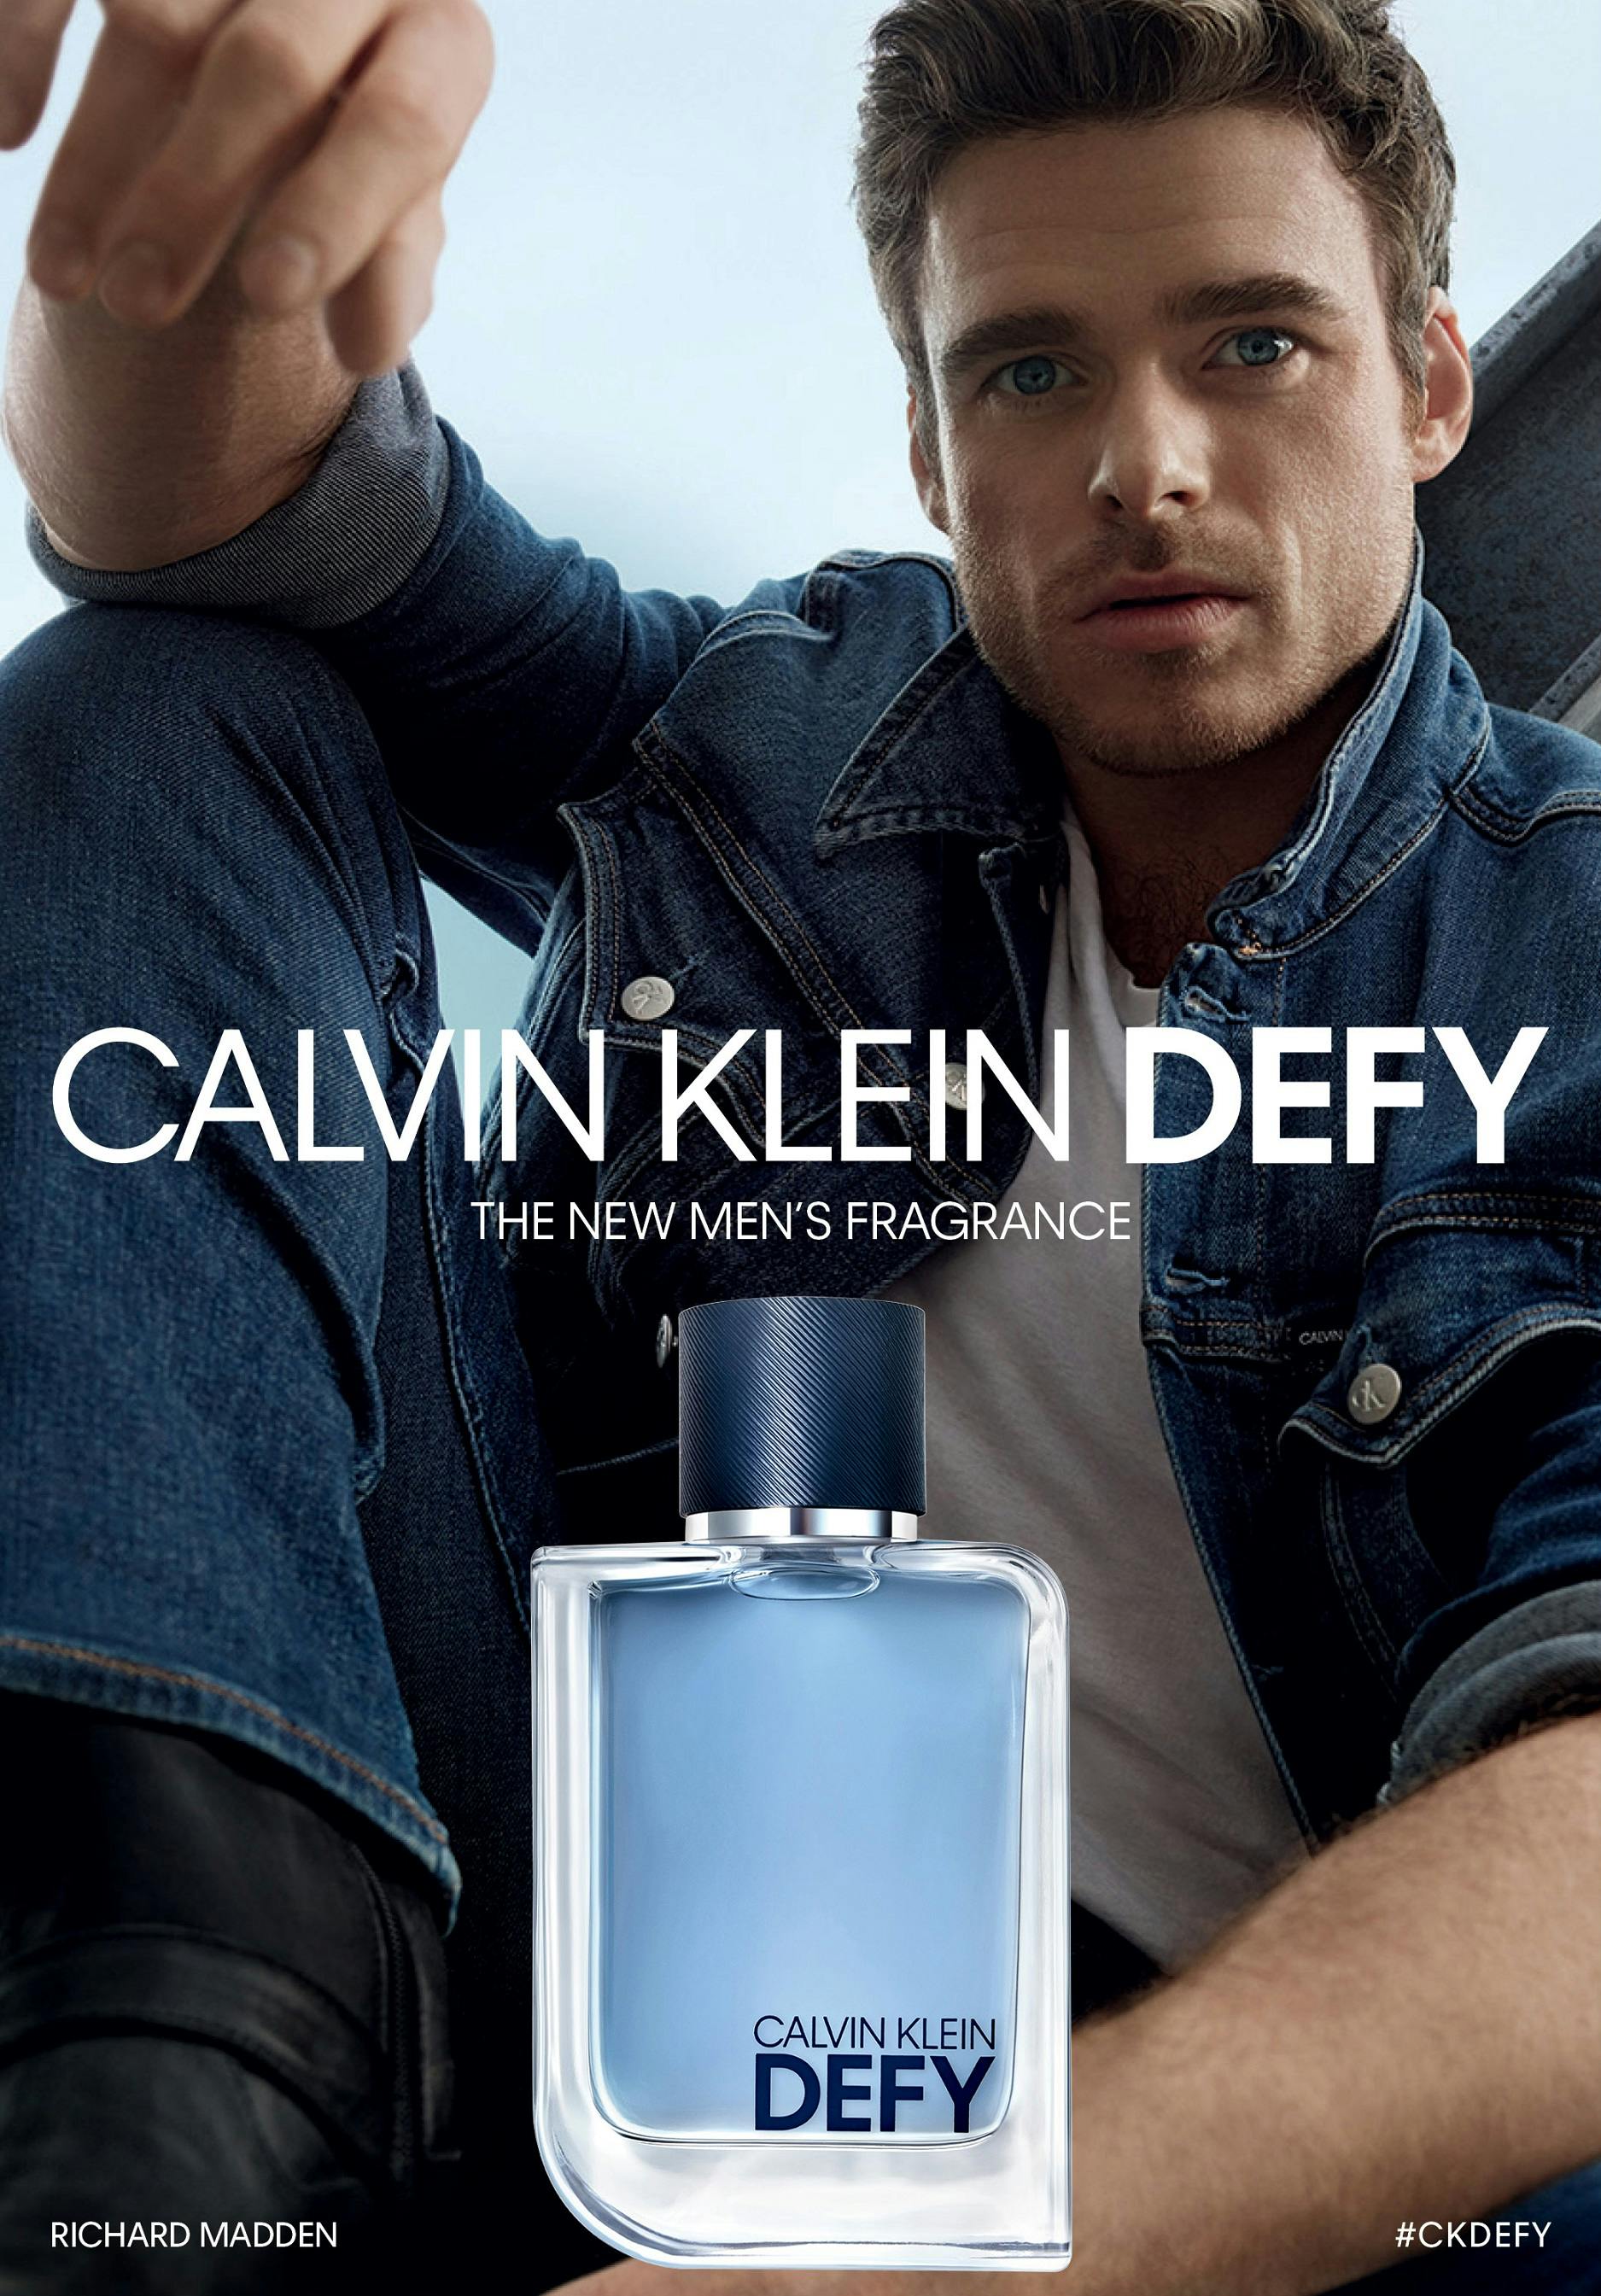 Richard Madden Defies the Odds for Calvin Klein's New Fragrance - Eternals  Actor Defy